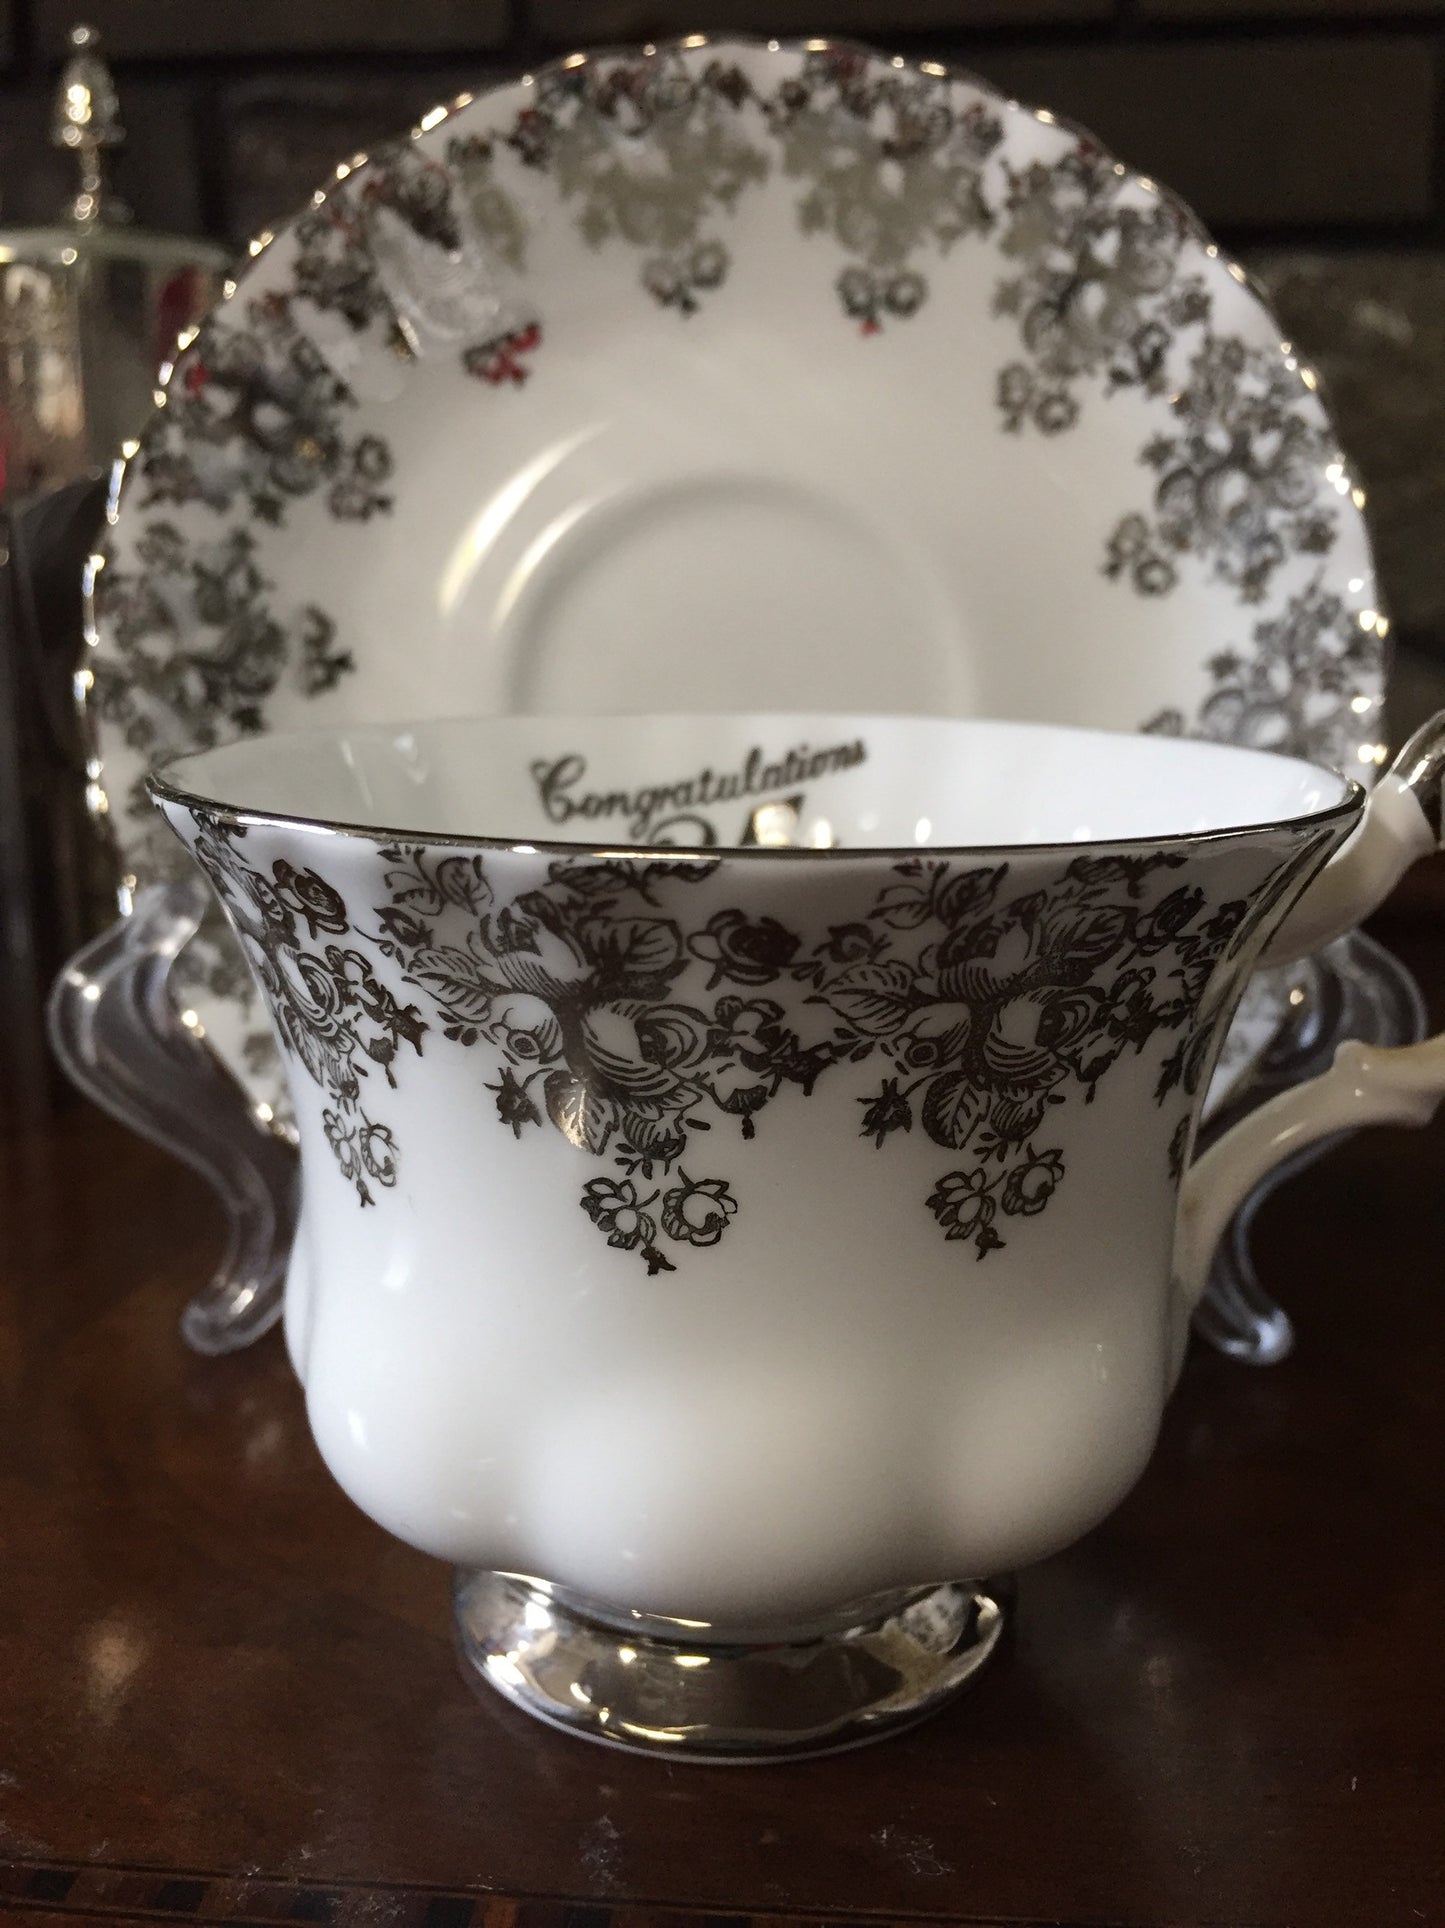 Royal Albert Silver Anniversary Teacups - Vintage Royal Albert Teacup and Saucer - Set of 2 Vintage Tea Cups - 25th Anniversary